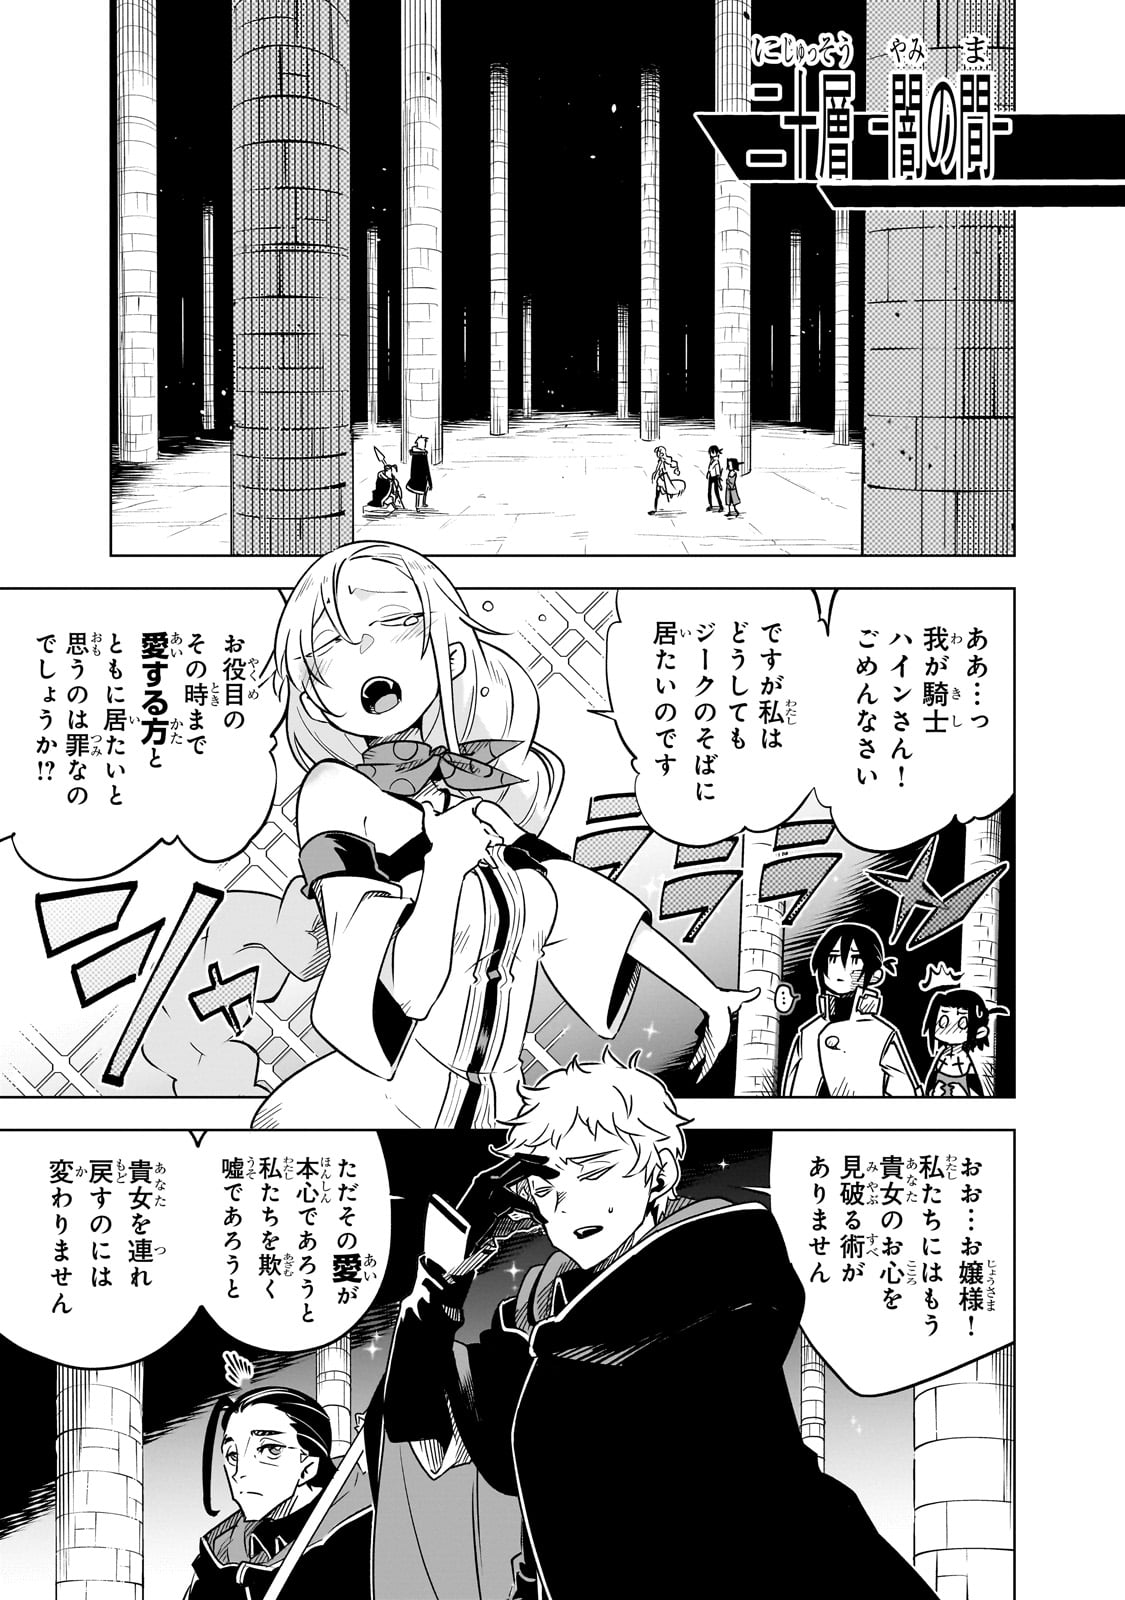 Isekai Meikyuu no Saishinbu o Mezasou - Chapter 29 - Page 1